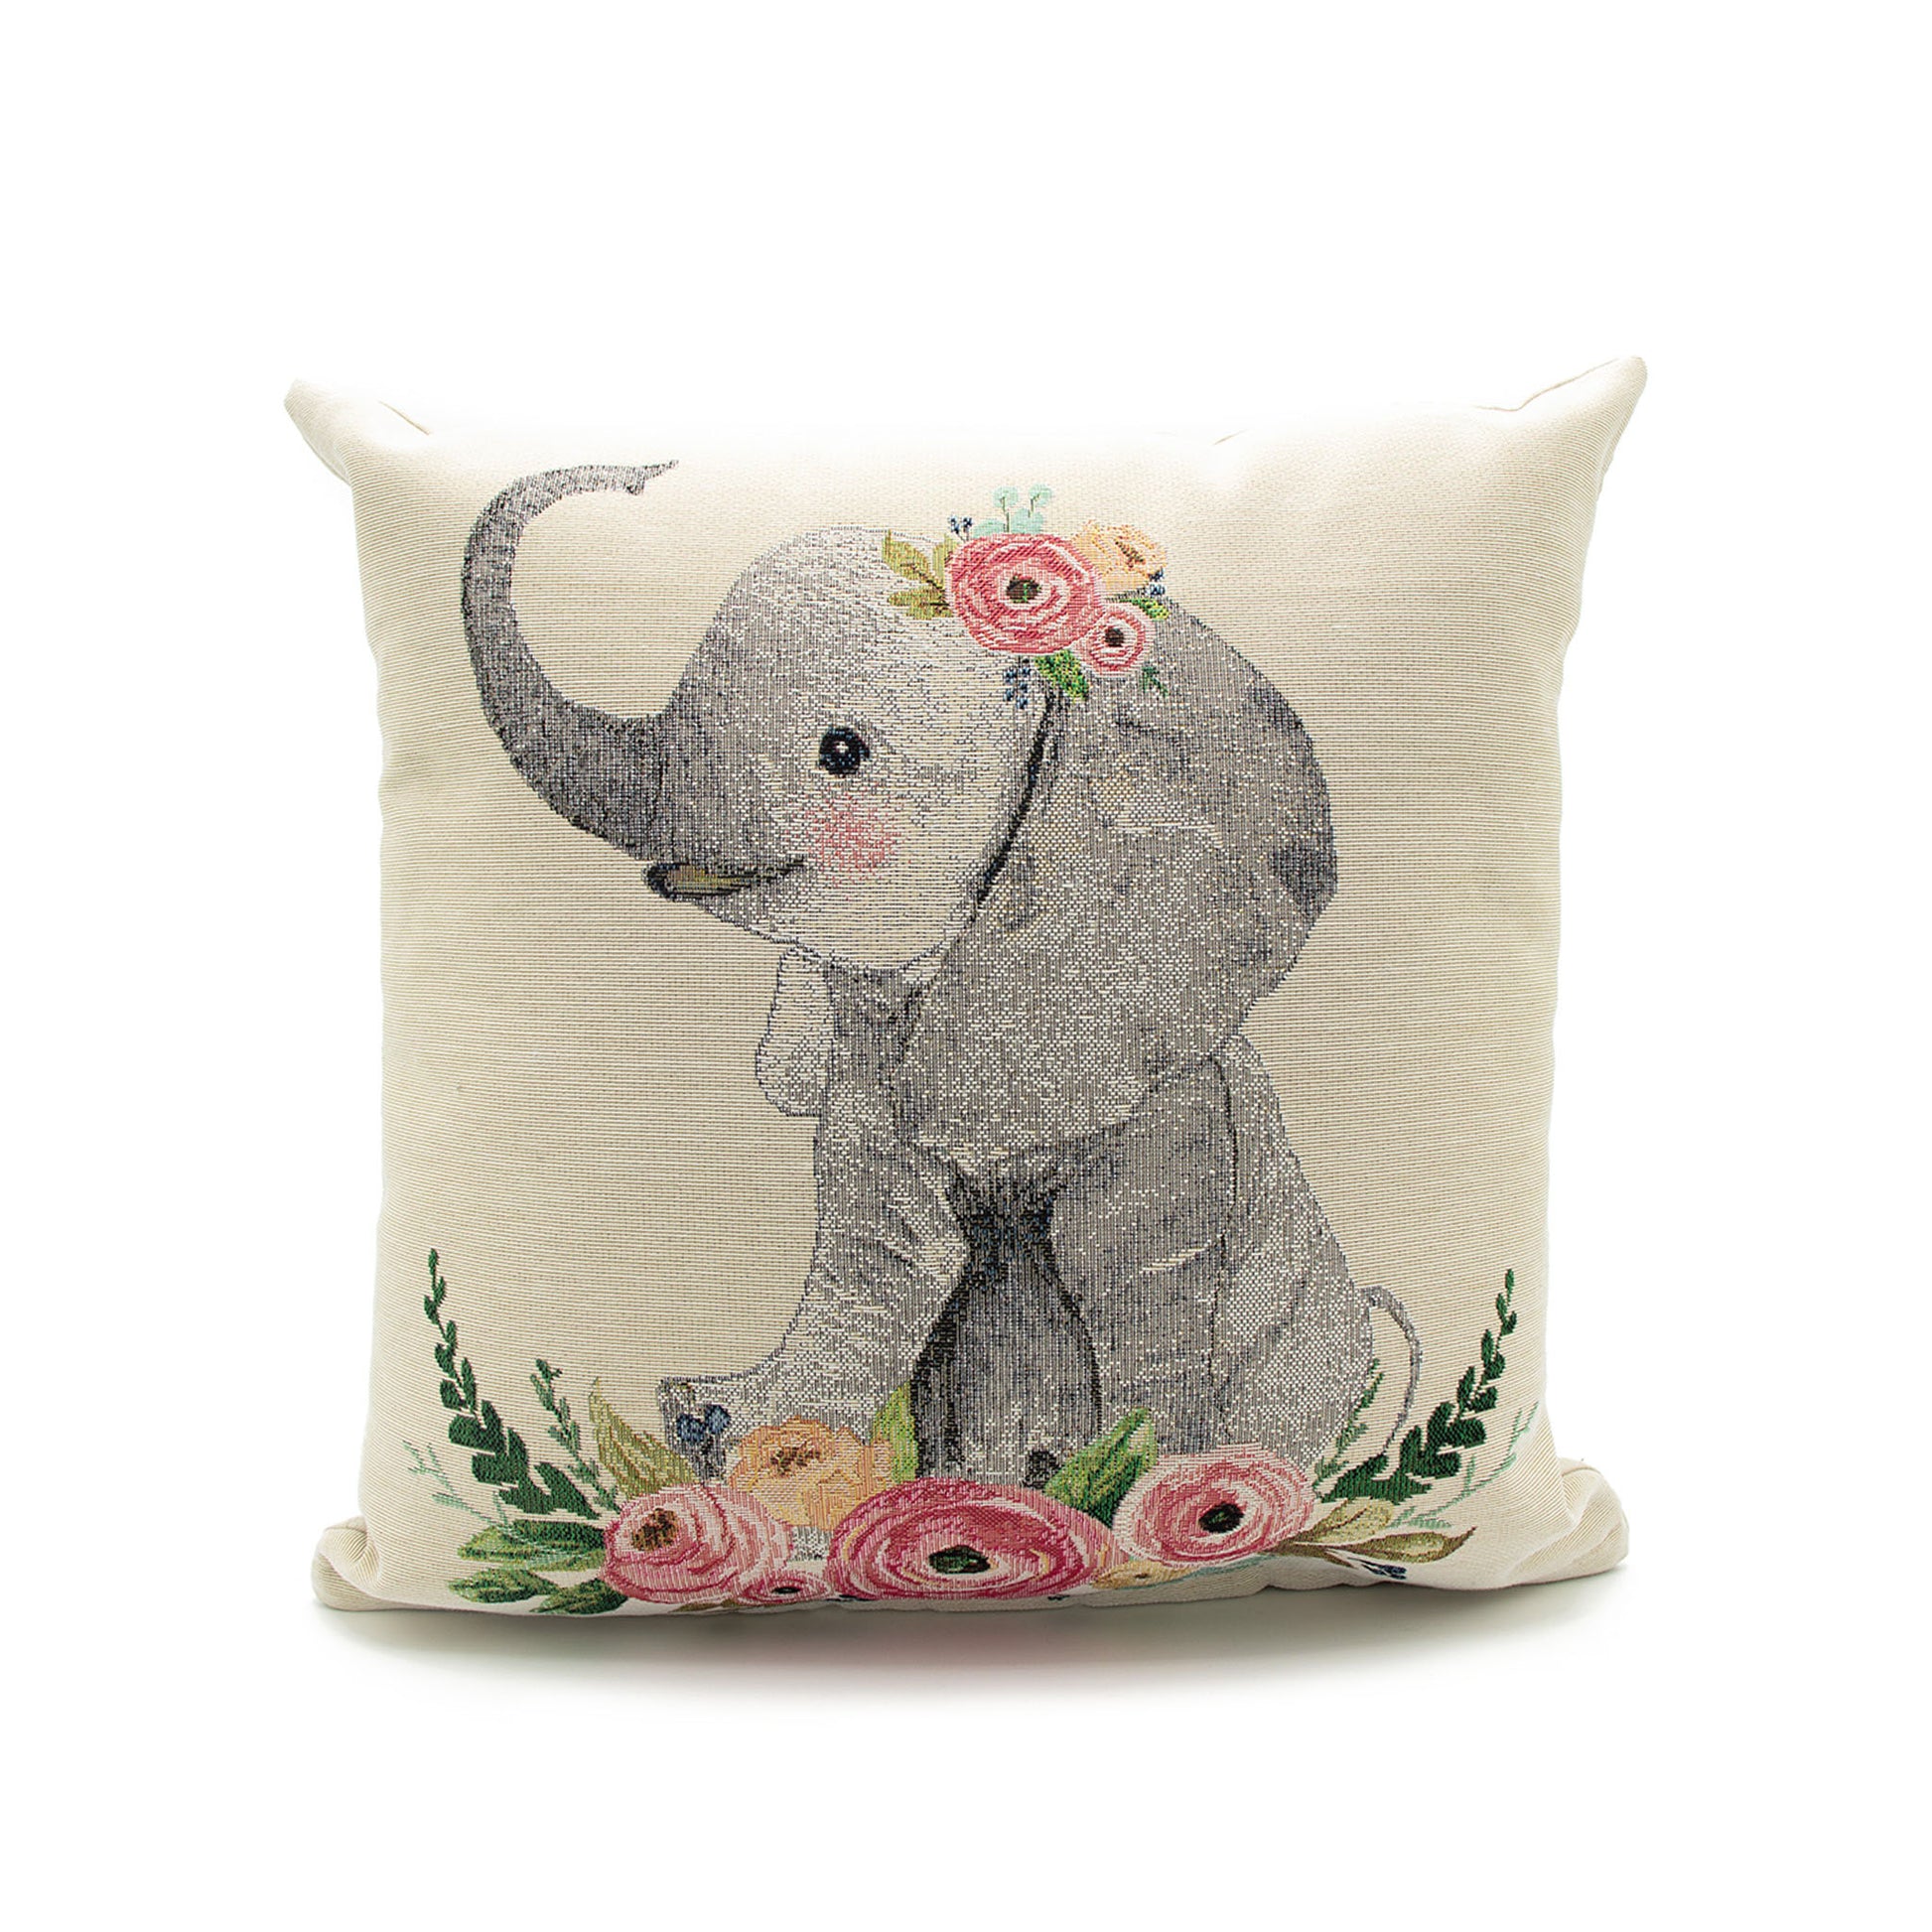 Elephant animal print cushion 